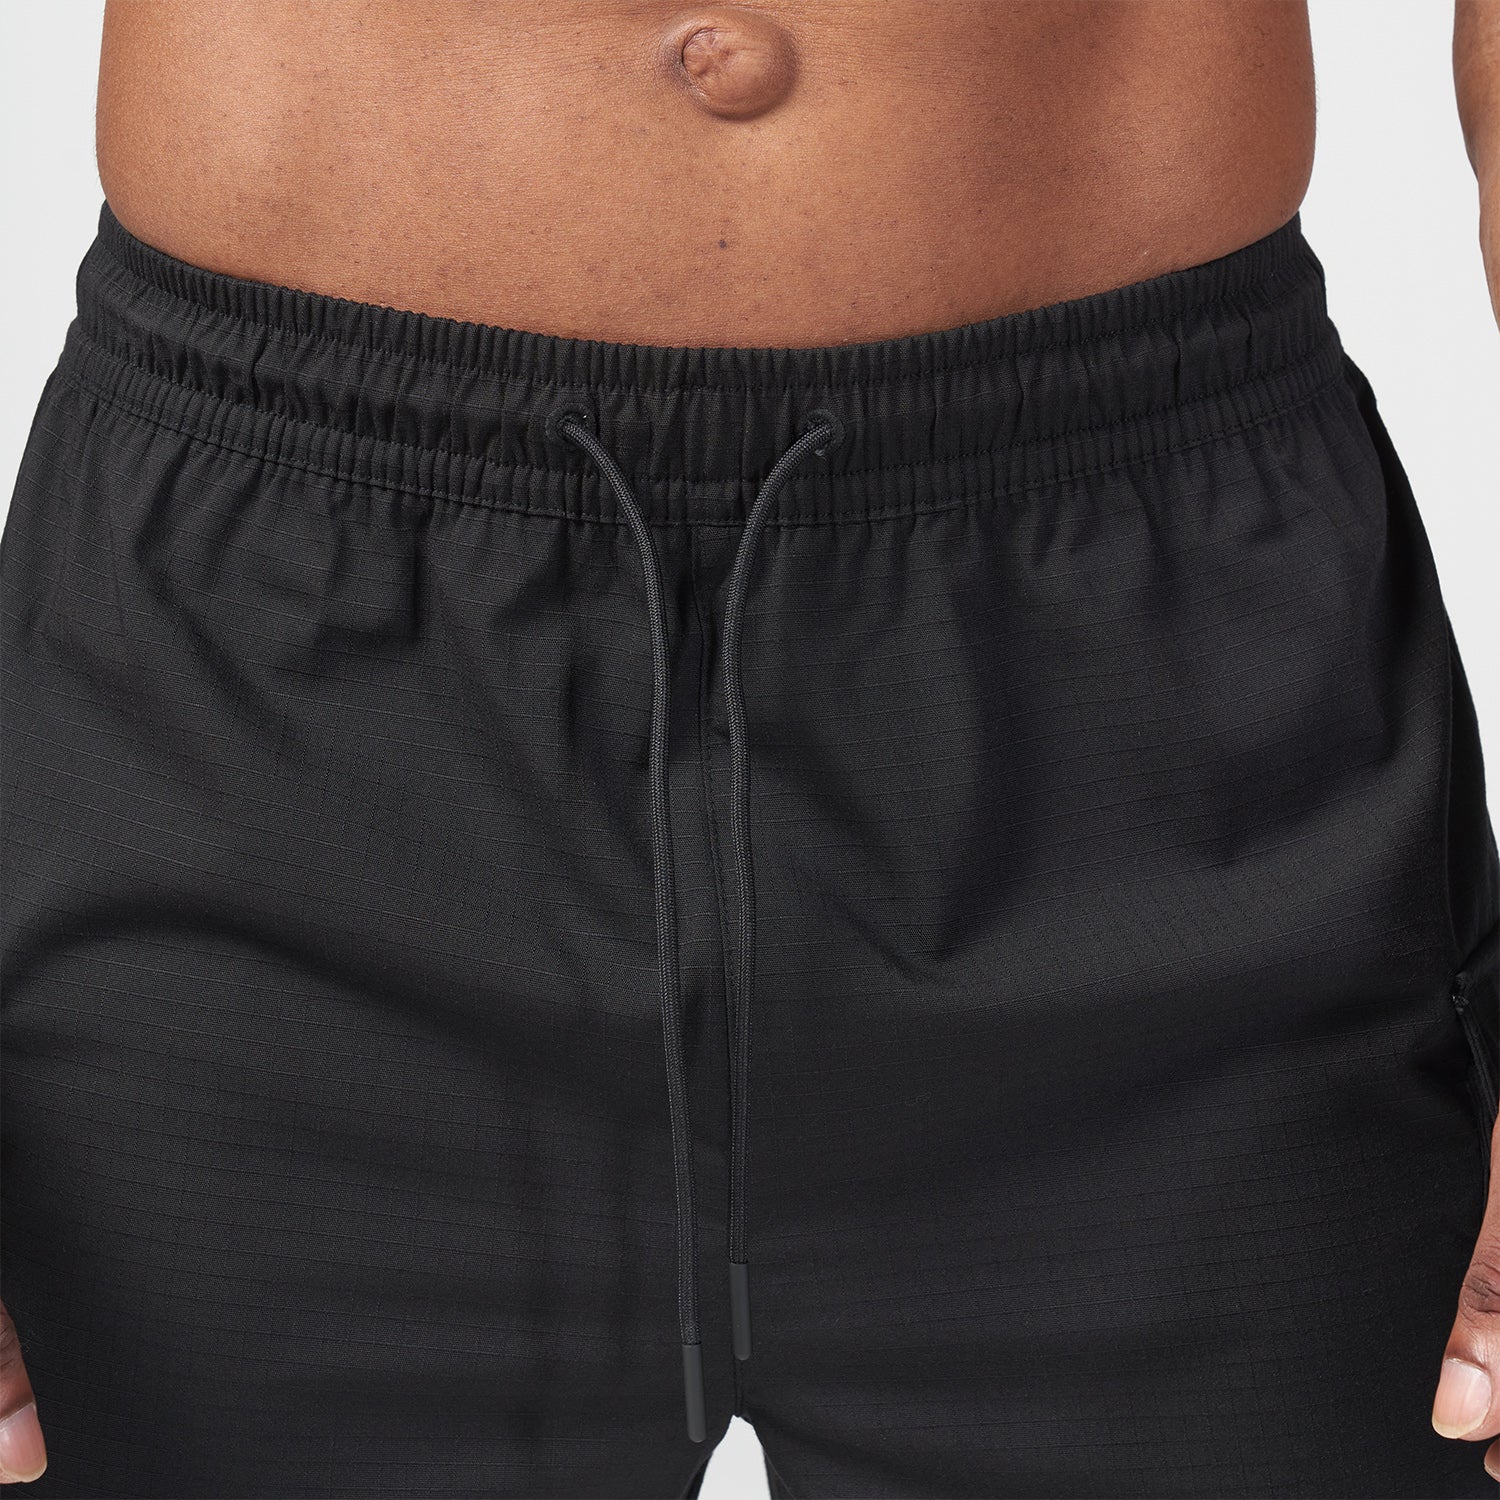 squatwolf-gym-wear-code-urban-cargo-shorts-black-workout-short-for-men